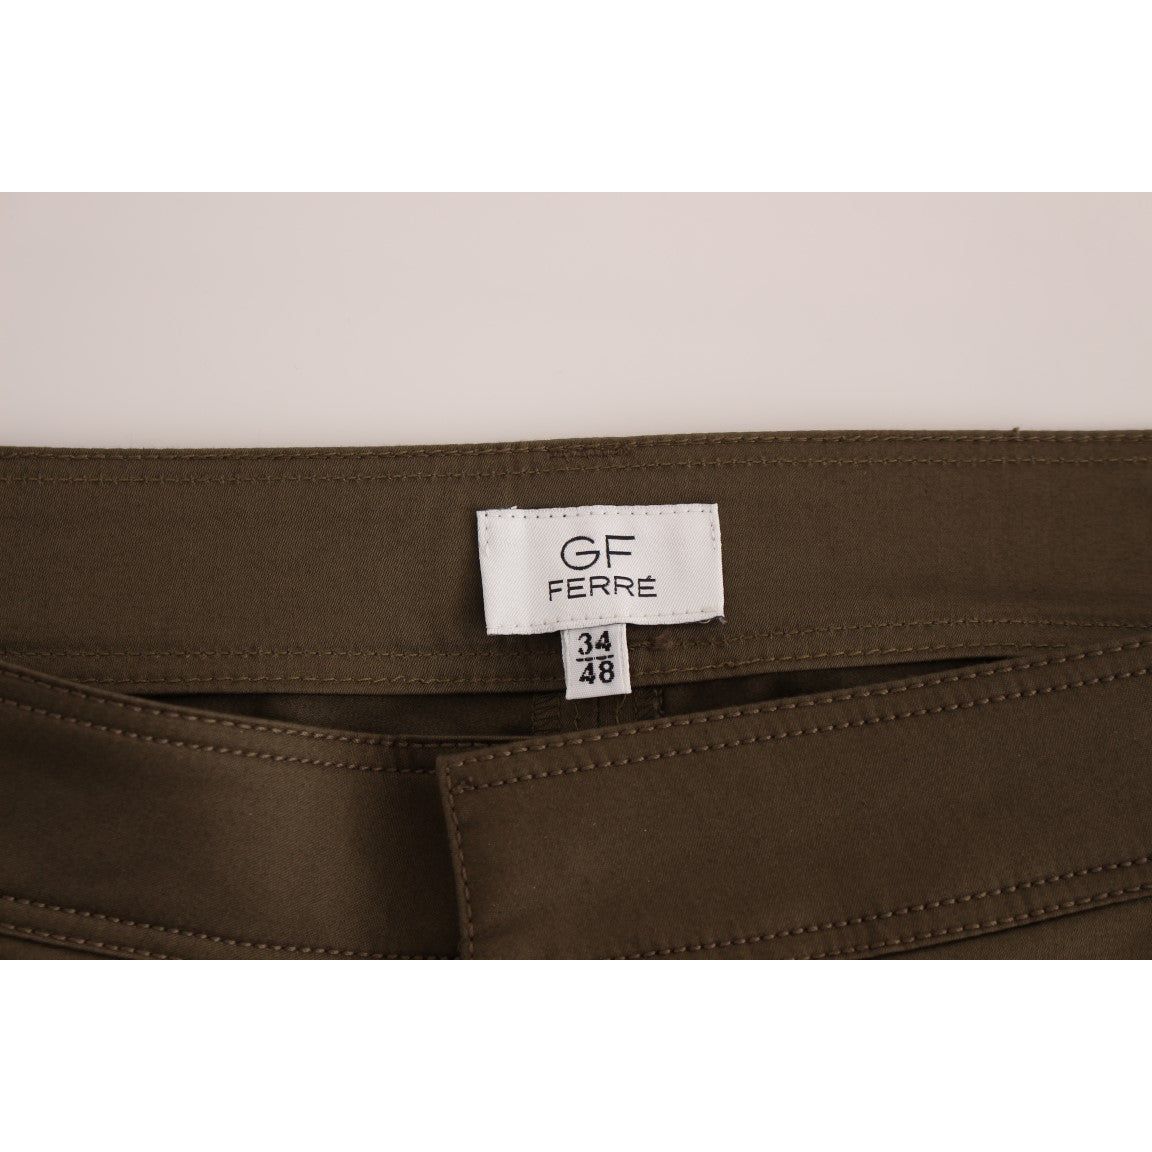 GF Ferre Elegant Green Comfort Straight Fit Pants green-cotton-stretch-comfort-fit-pants 53251-green-cotton-stretch-comfort-fit-pants-6.jpg